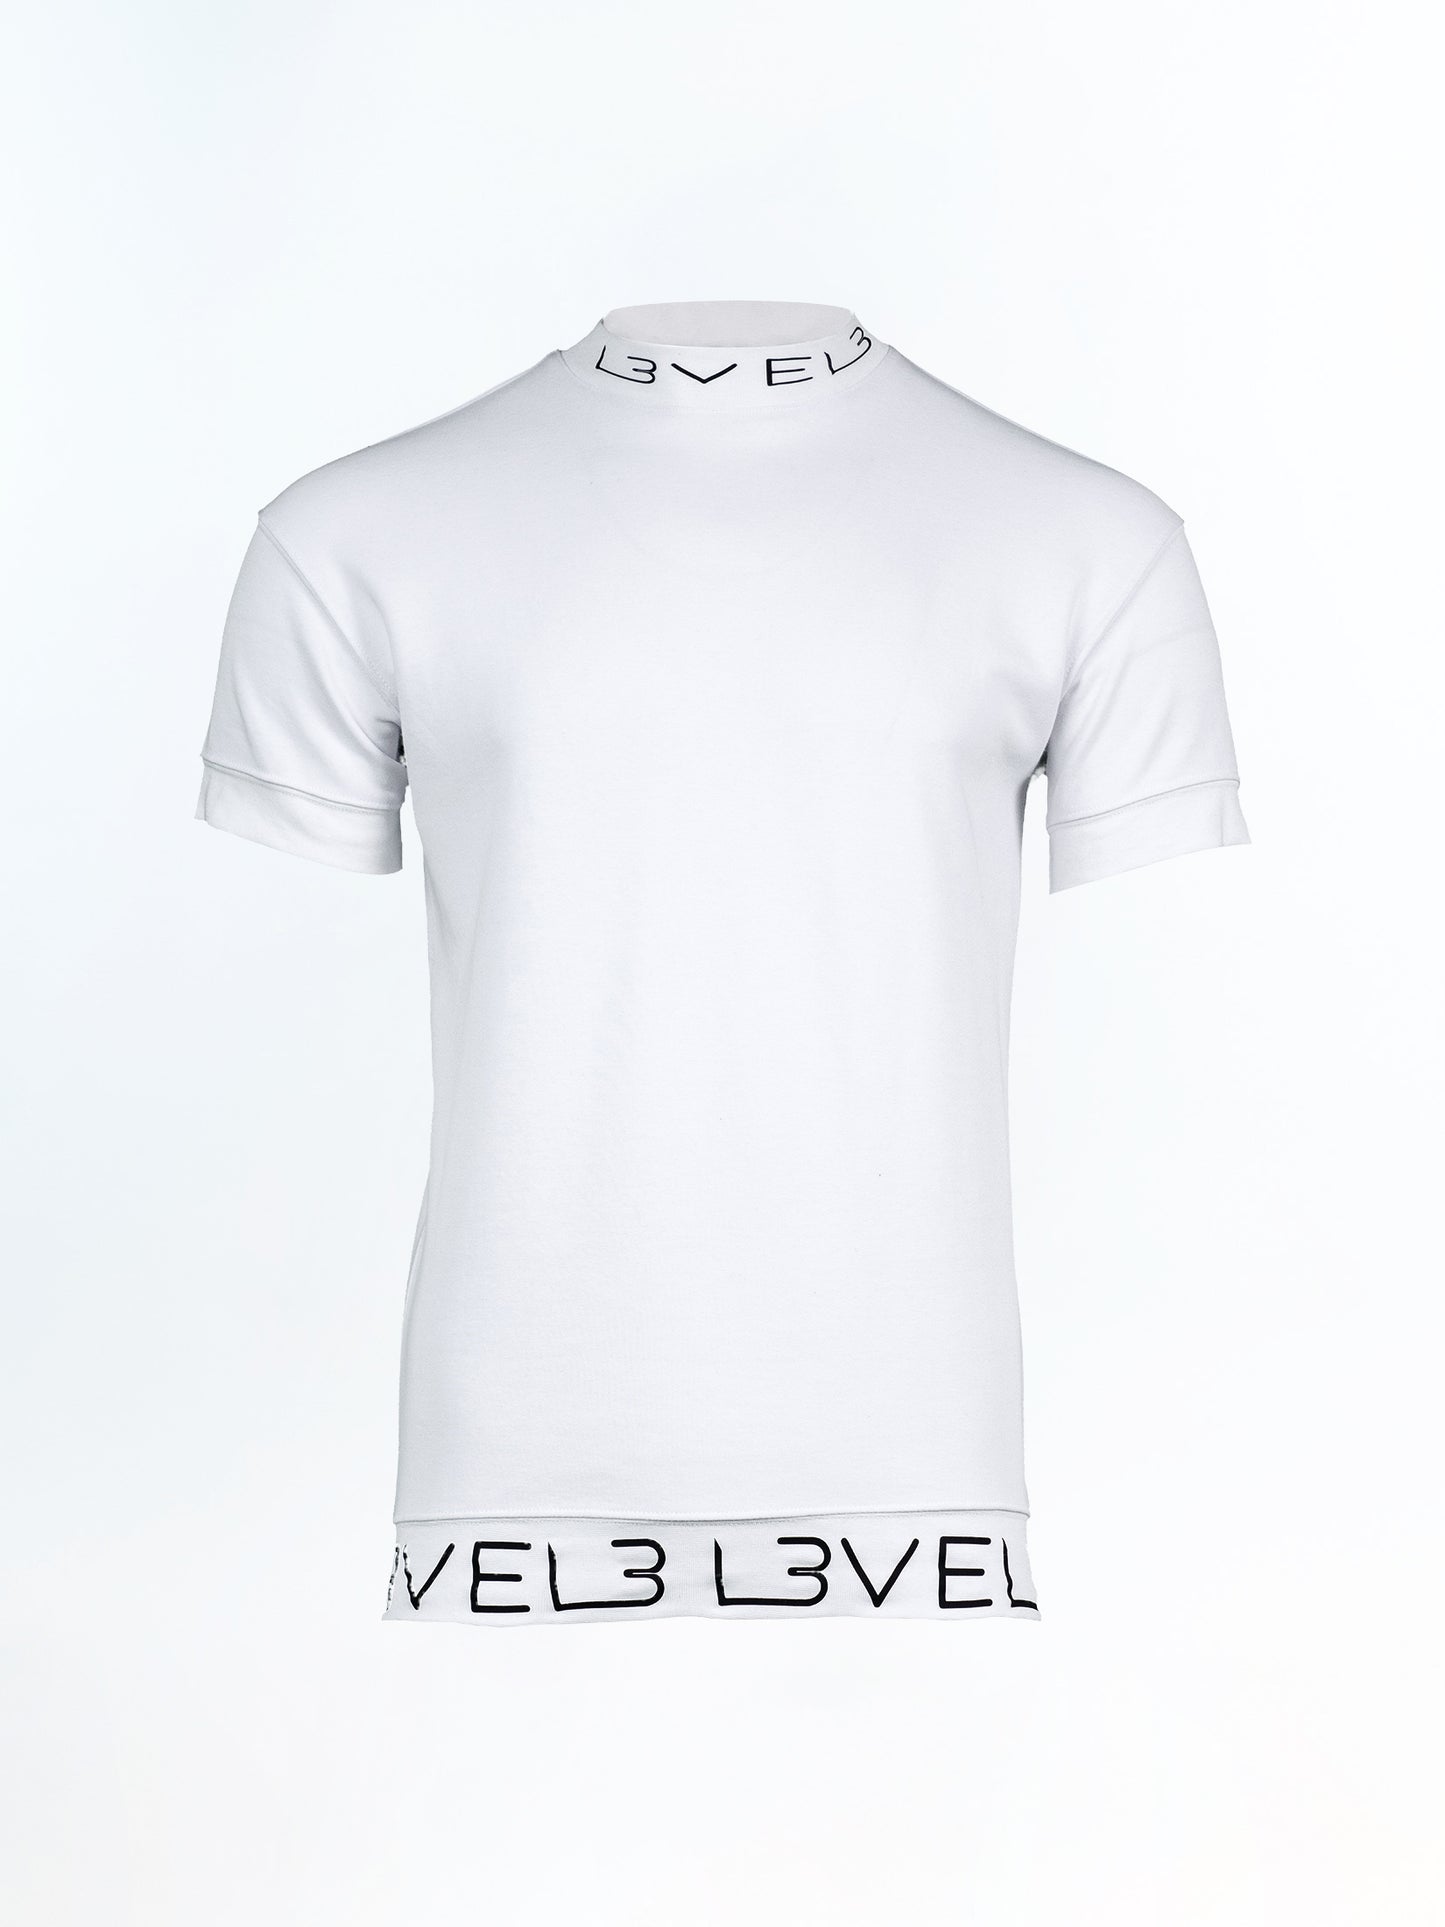 L3VEL3™ Collared Shirt